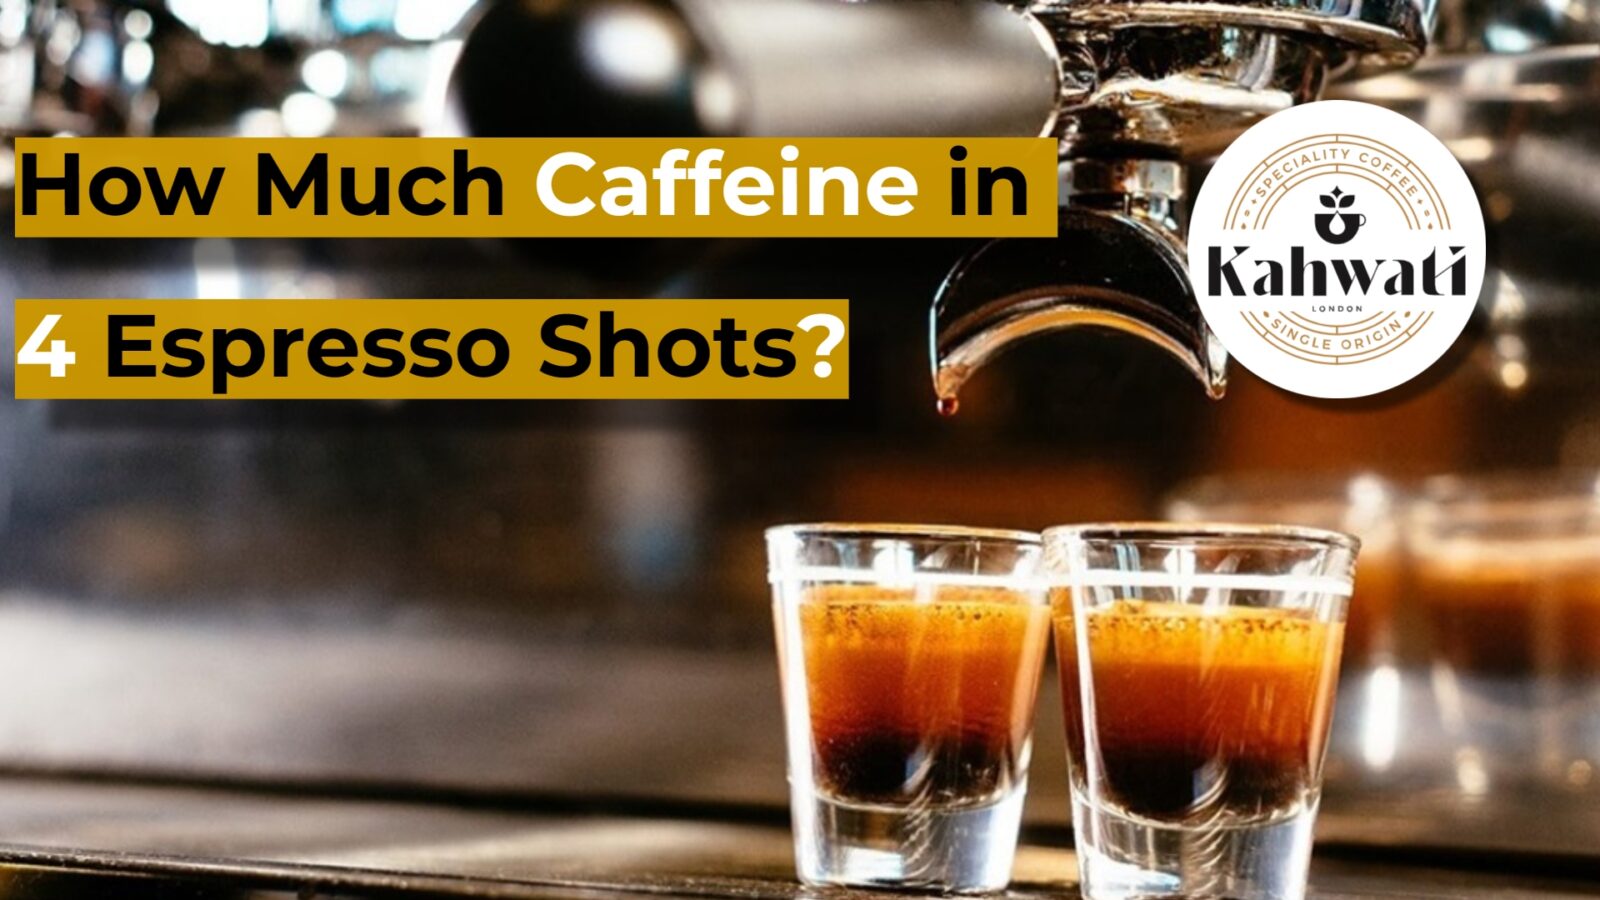 Caffeine in 4 Espresso Shots